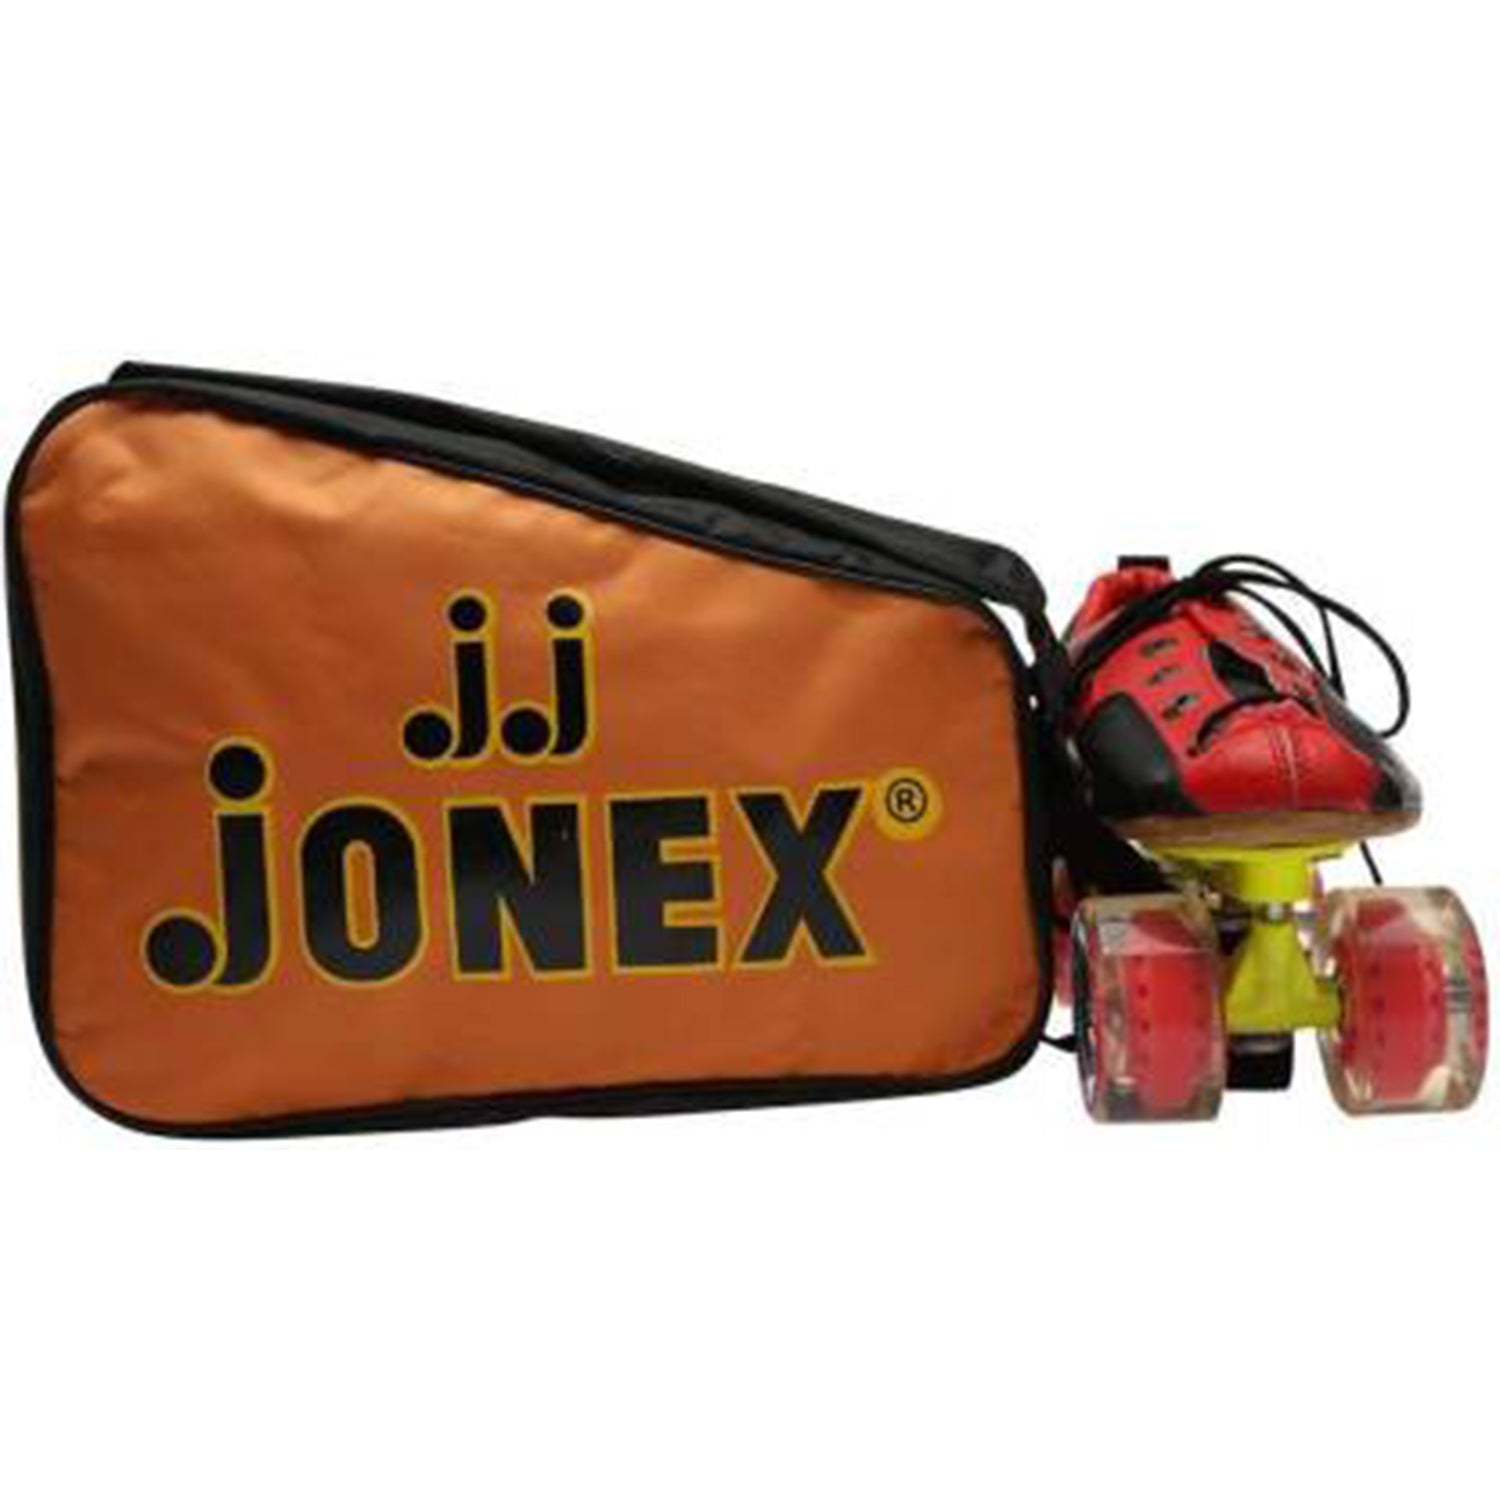 JJ JONEX Professional Shoe Skate for Better Grip (Color may Vary) - Best Price online Prokicksports.com